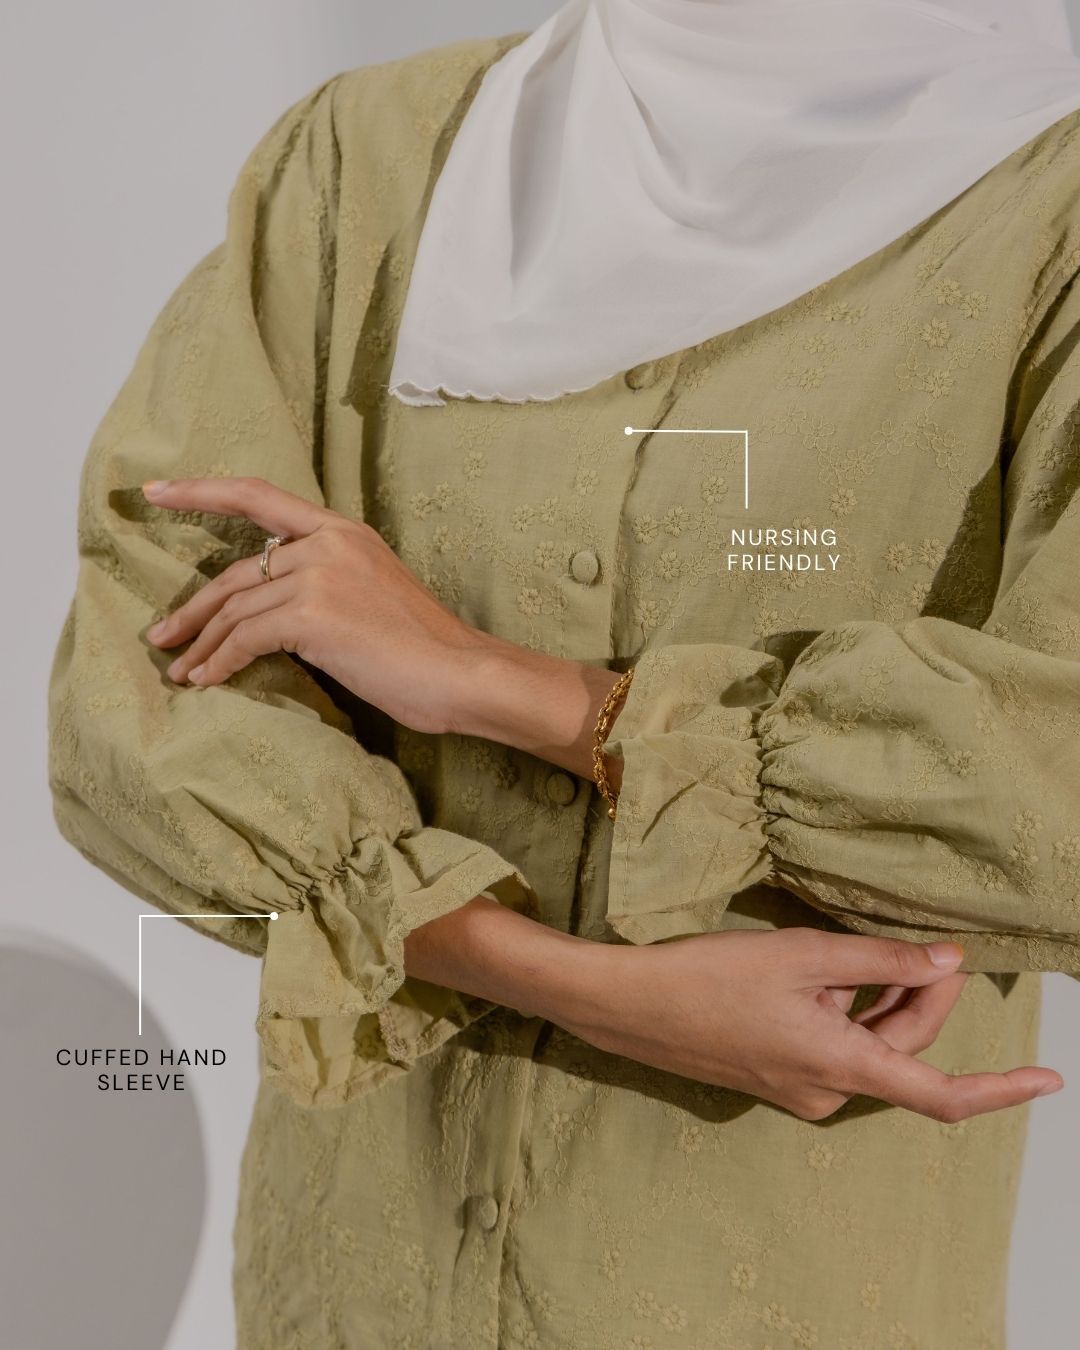 haura-wear-cotton-baju-muslimah-set-seluar-suit-muslimah-set-baju-dan-seluar-muslimah-palazzo (1)